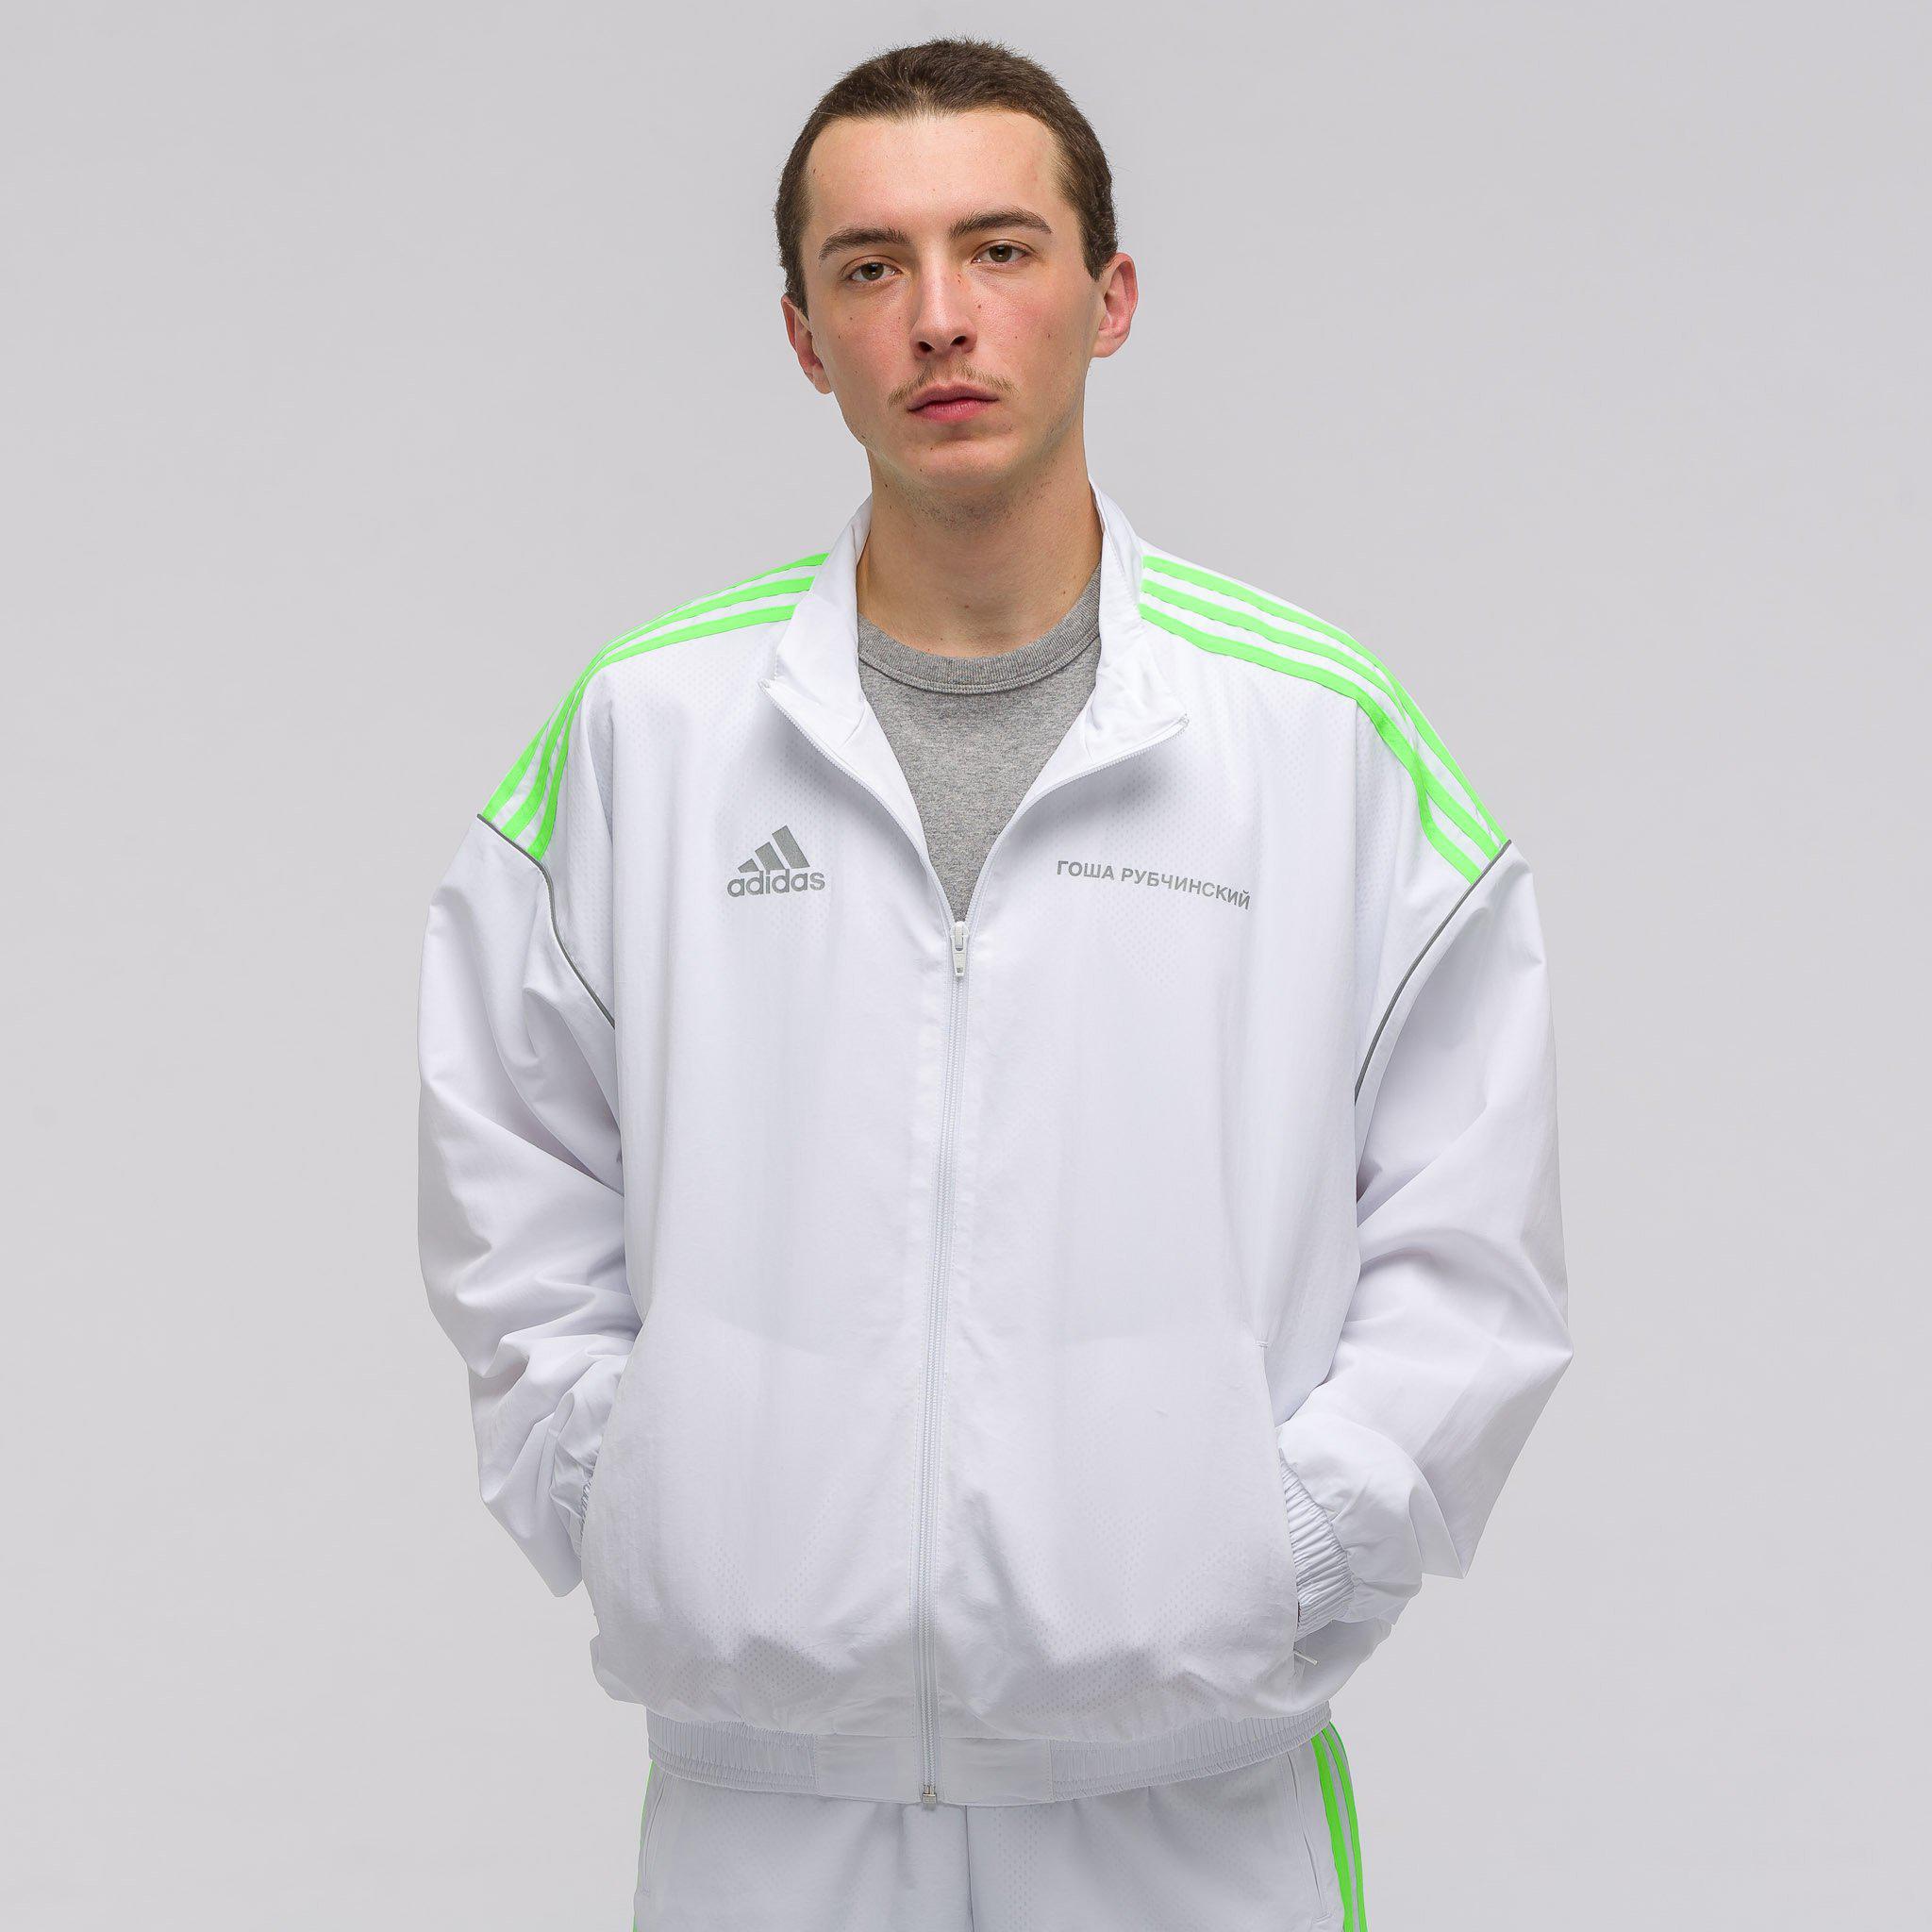 gosha rubchinskiy adidas coat